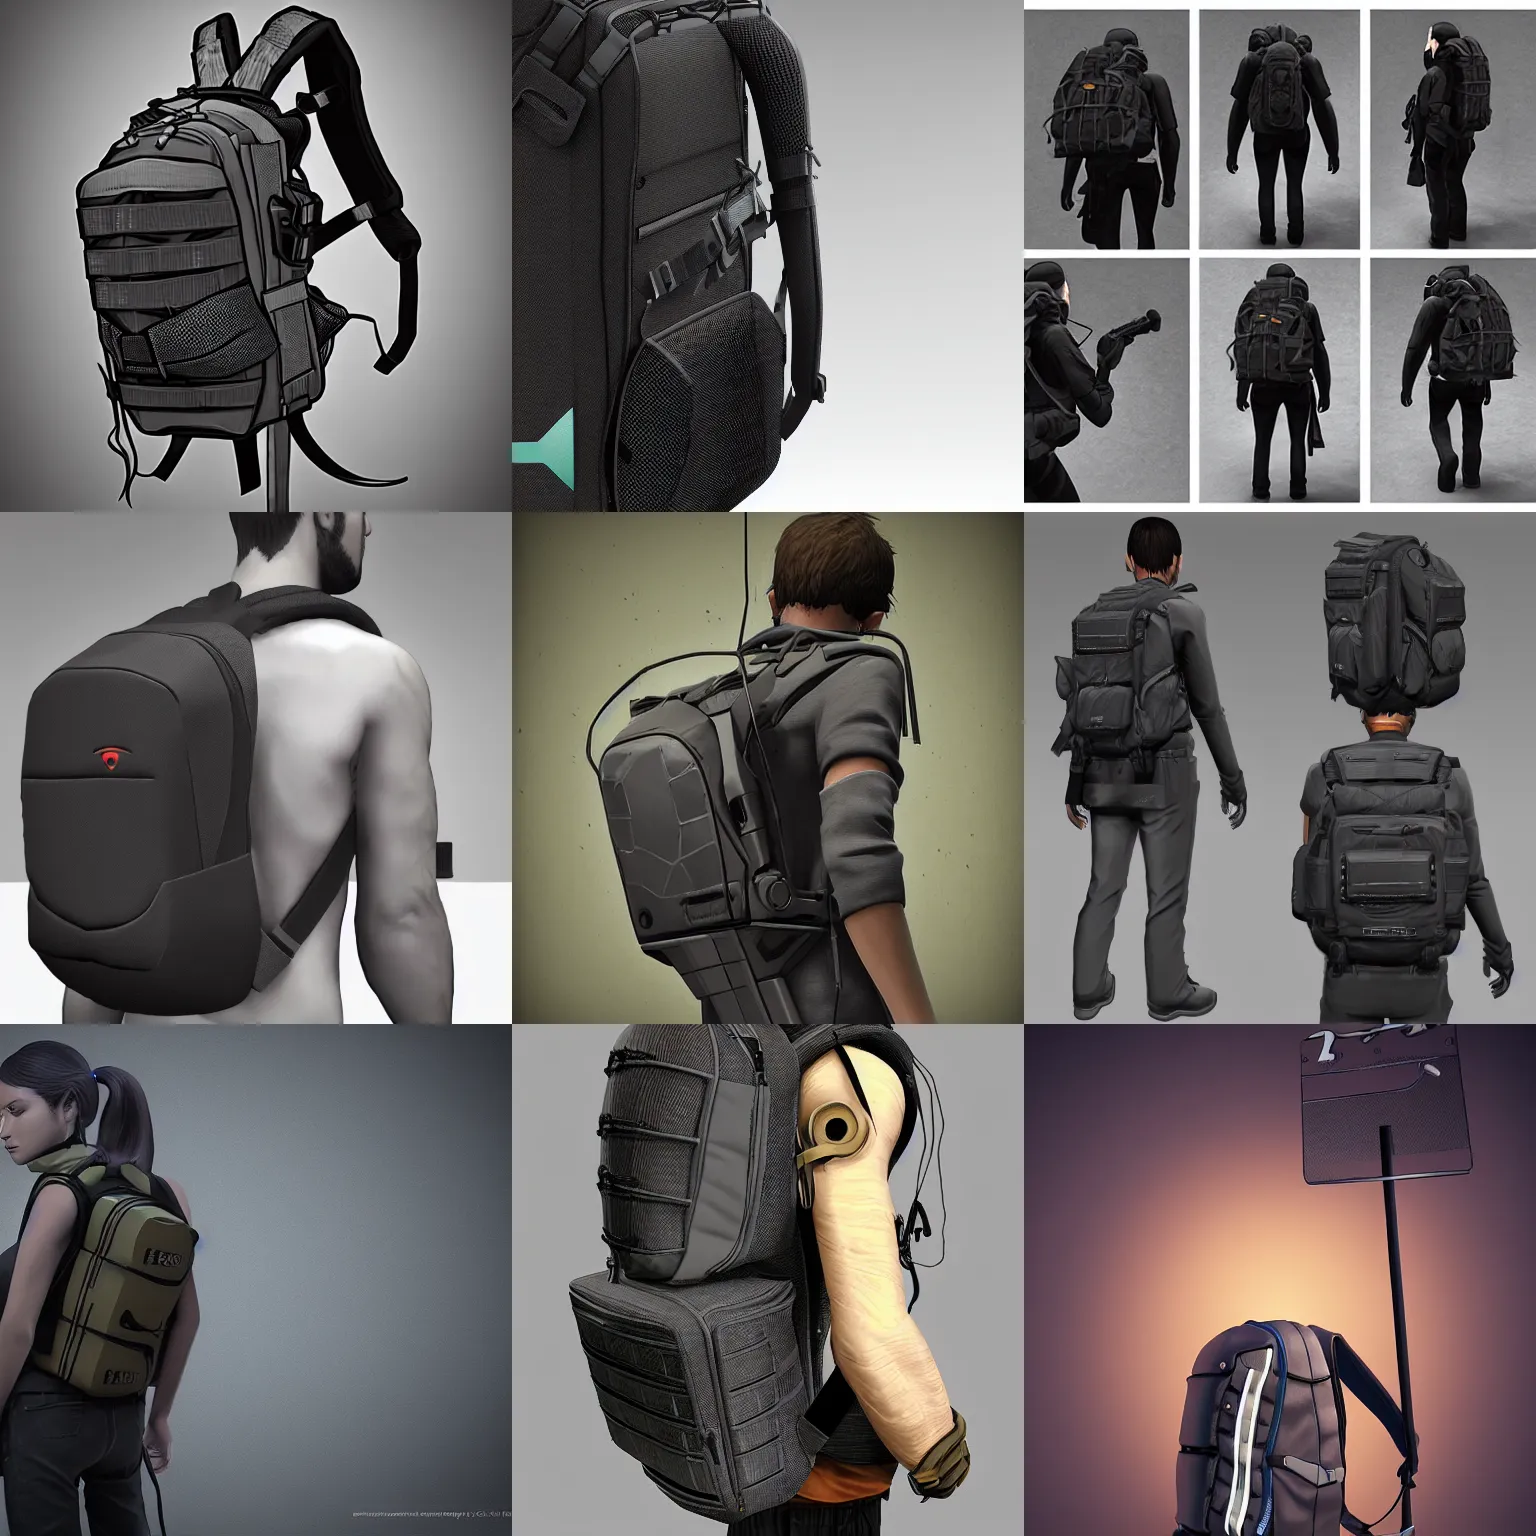 Prompt: hardmesh post, thief equipment backpack, by gregor rutkovski, ilya kuvshinov